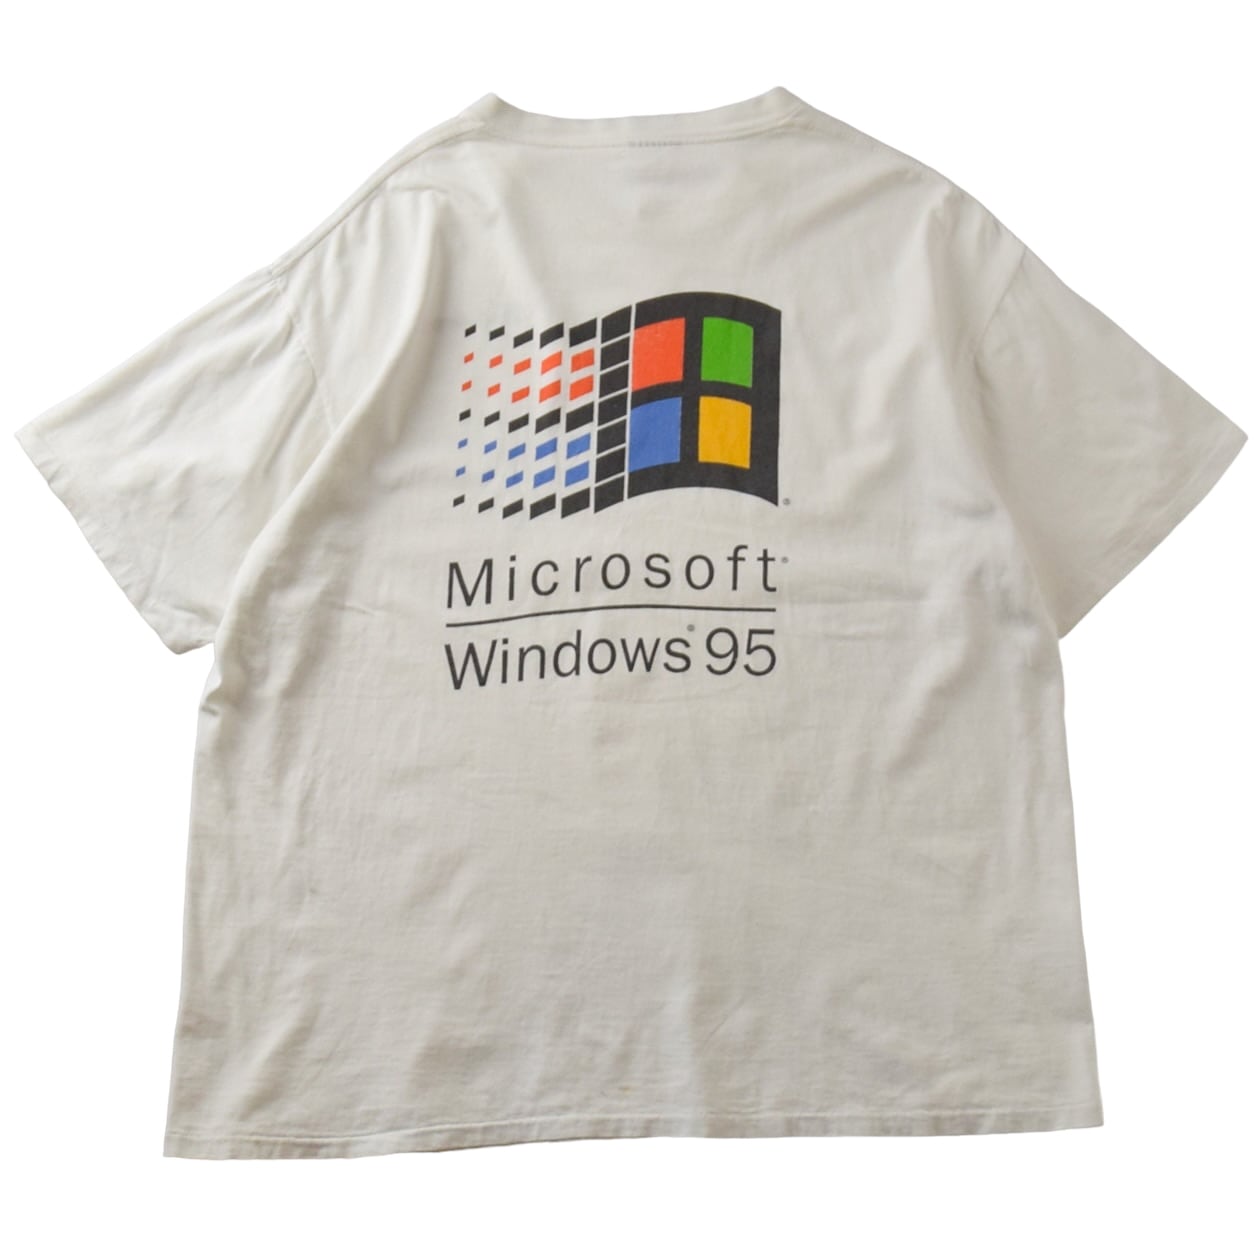 【USA製】90s Microsoft ヴィンテージ 企業プリントTシャツ XL